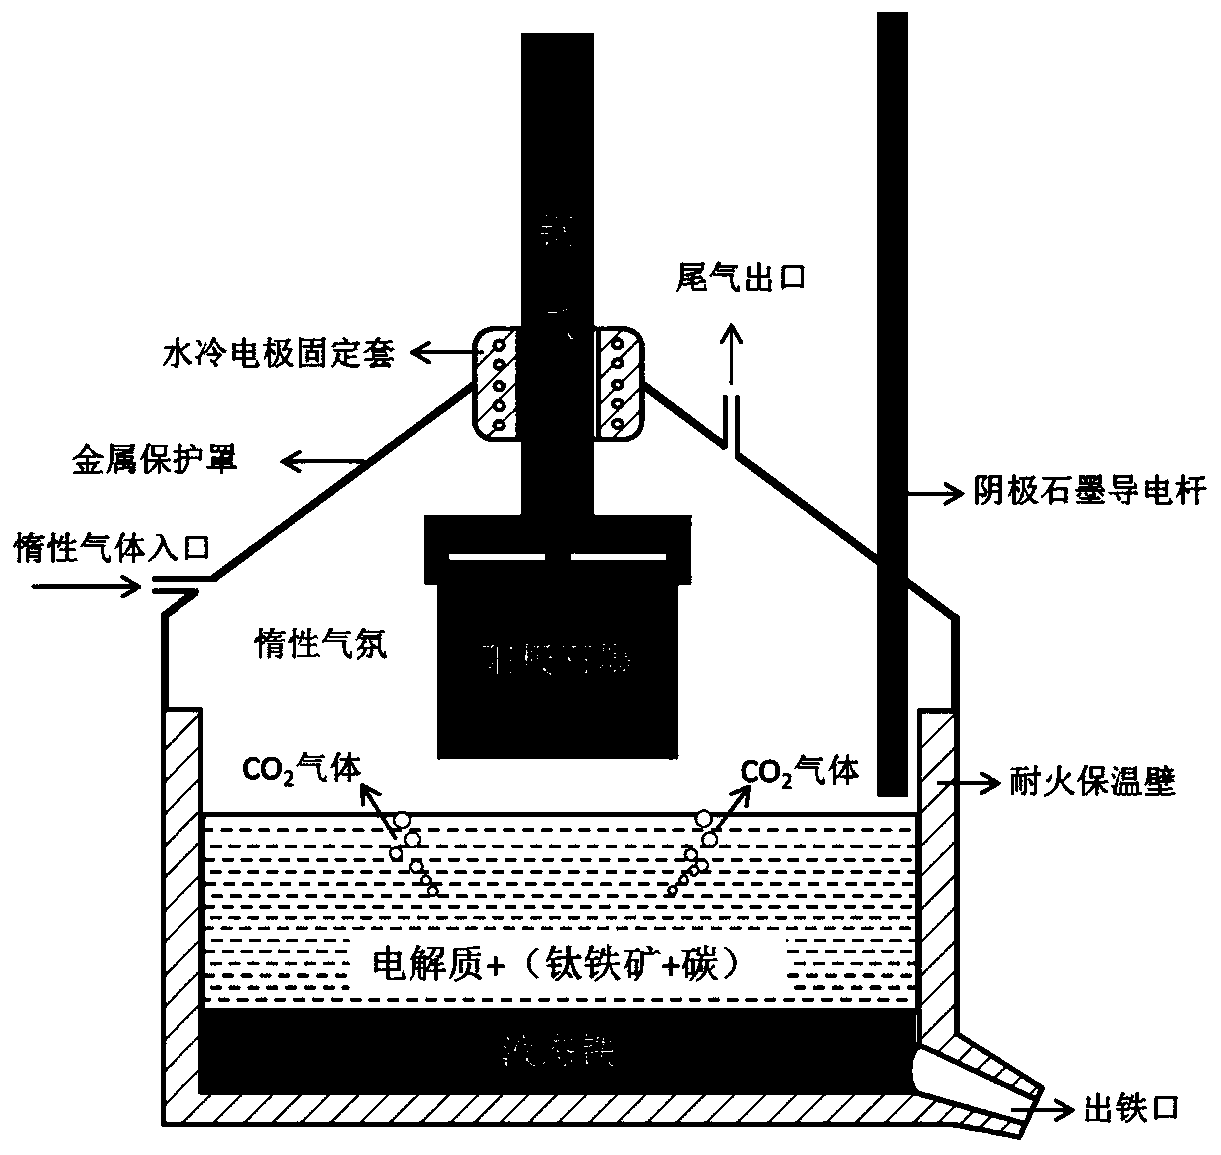 Method for preparing ilmenite by ilmenite carbothermic-electrolysis